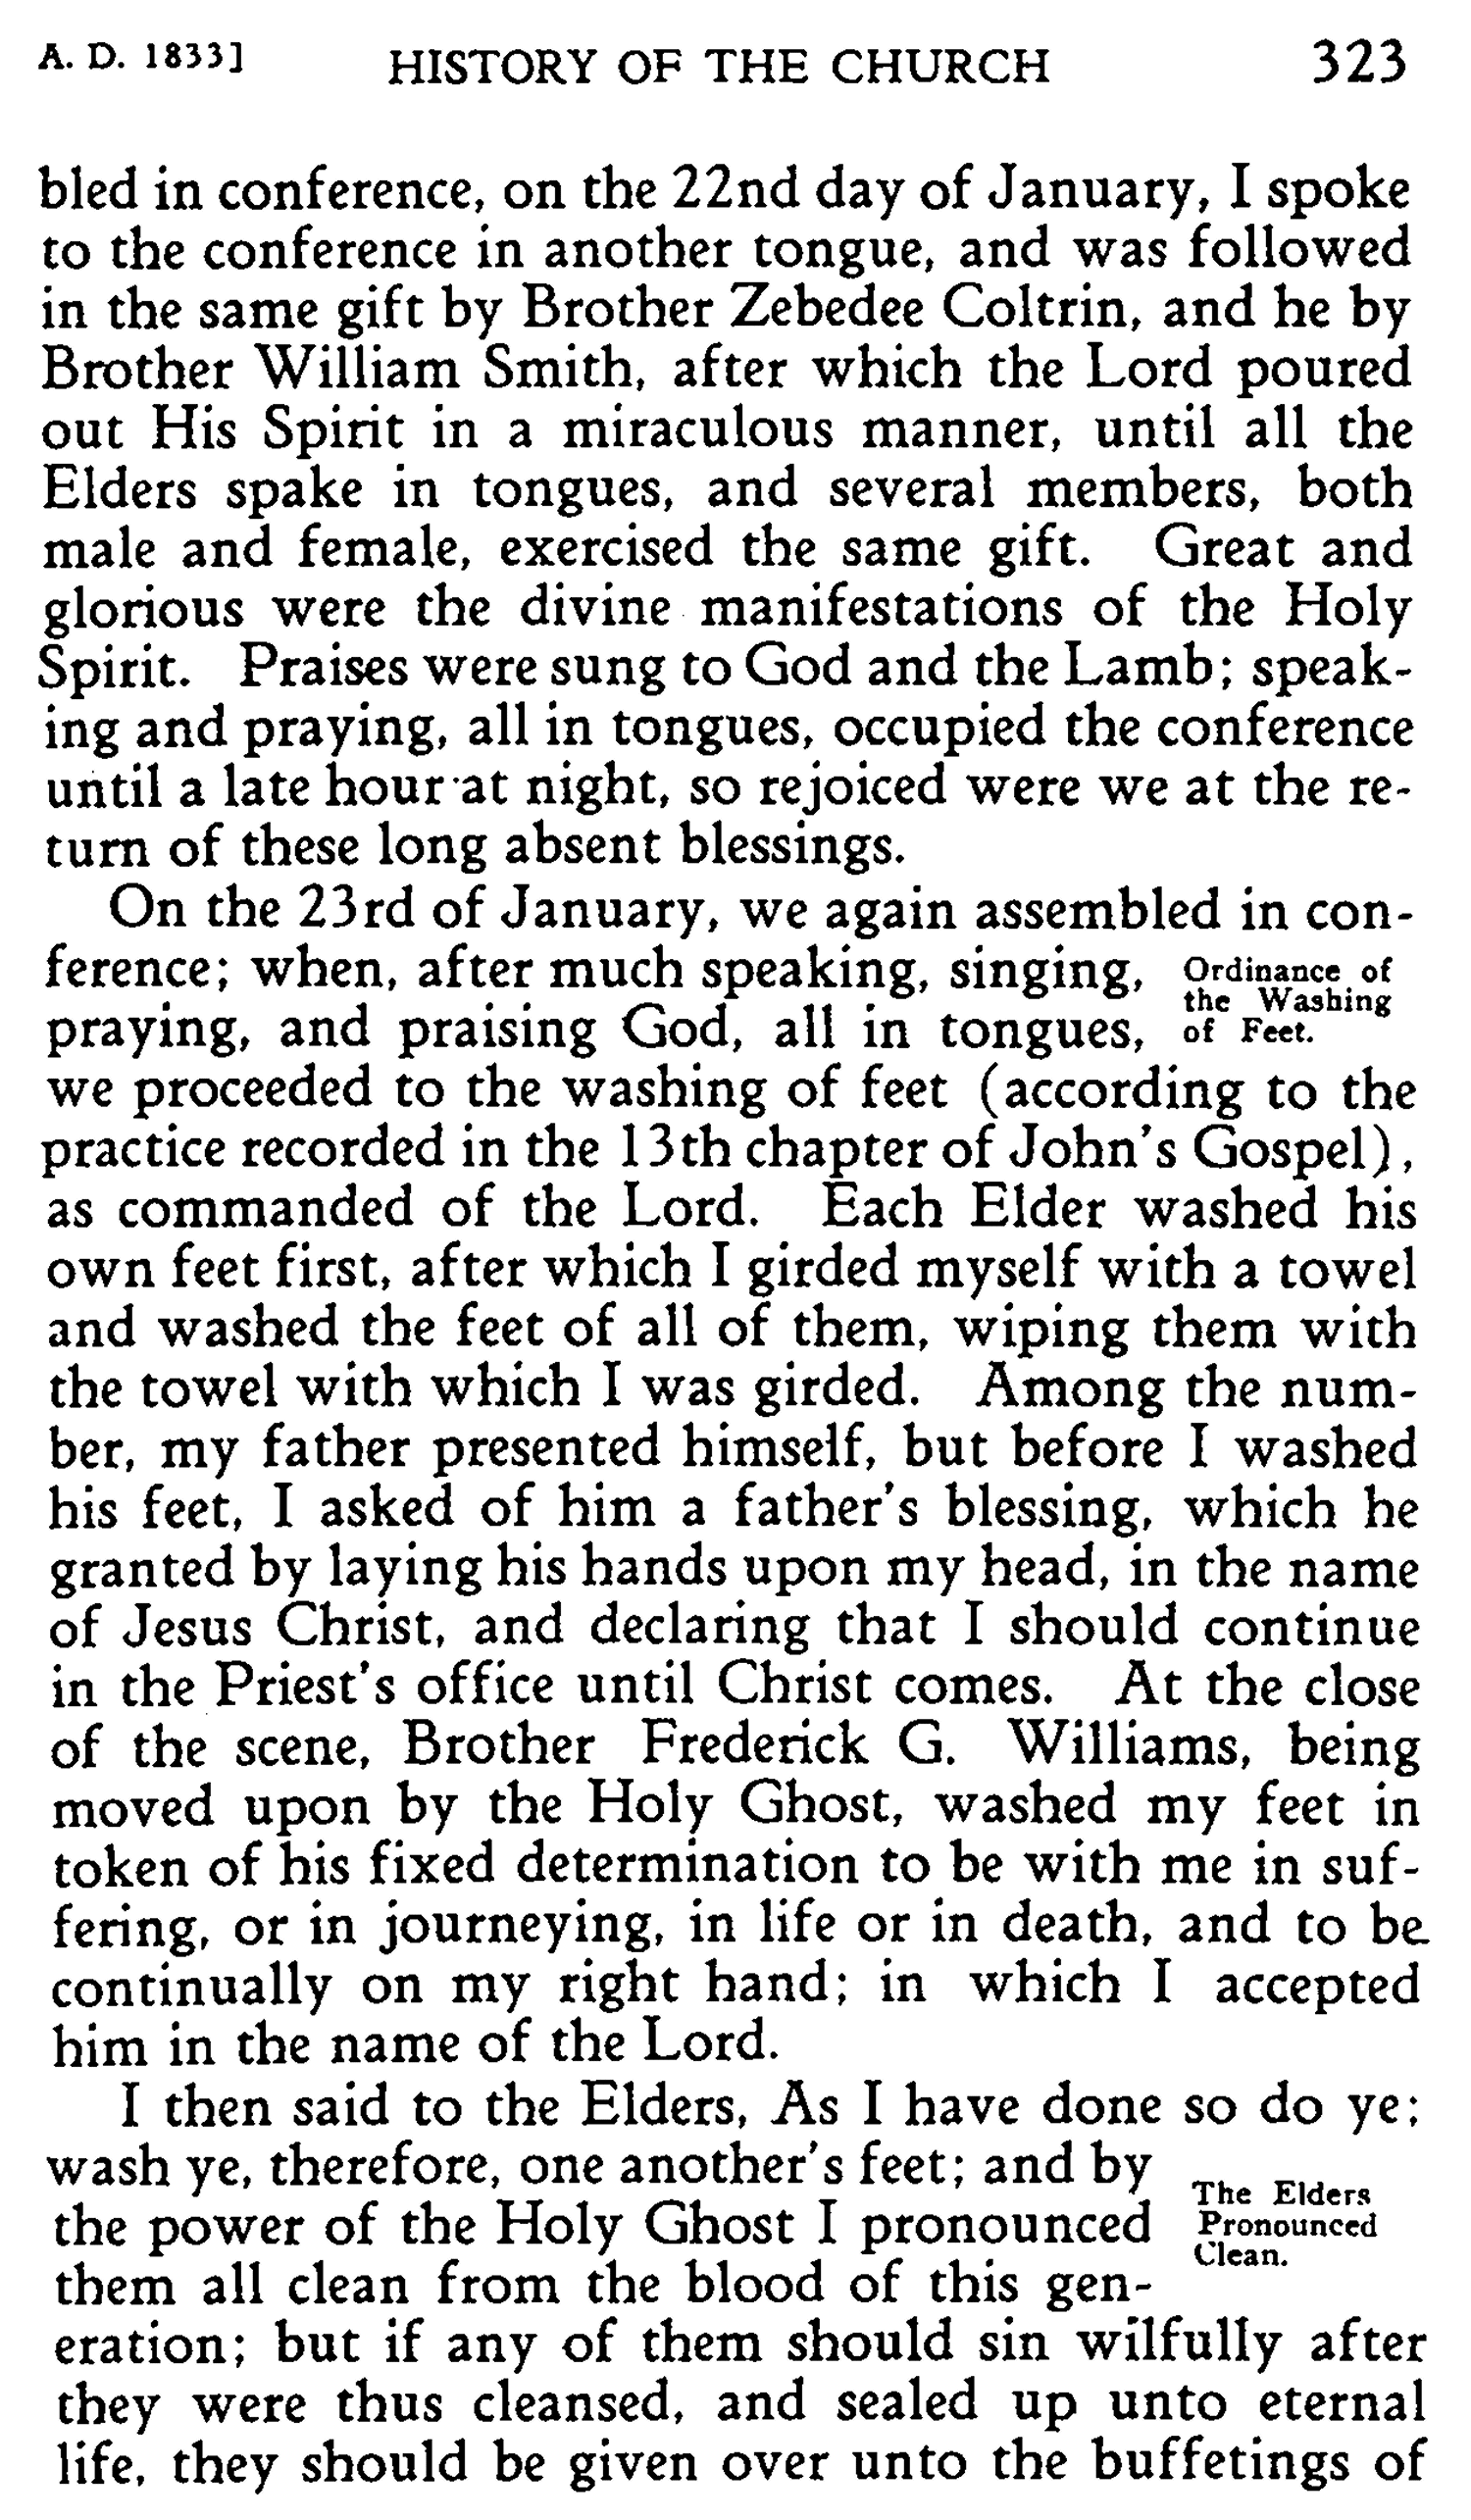 History of the Church, vol. 1, p. 323